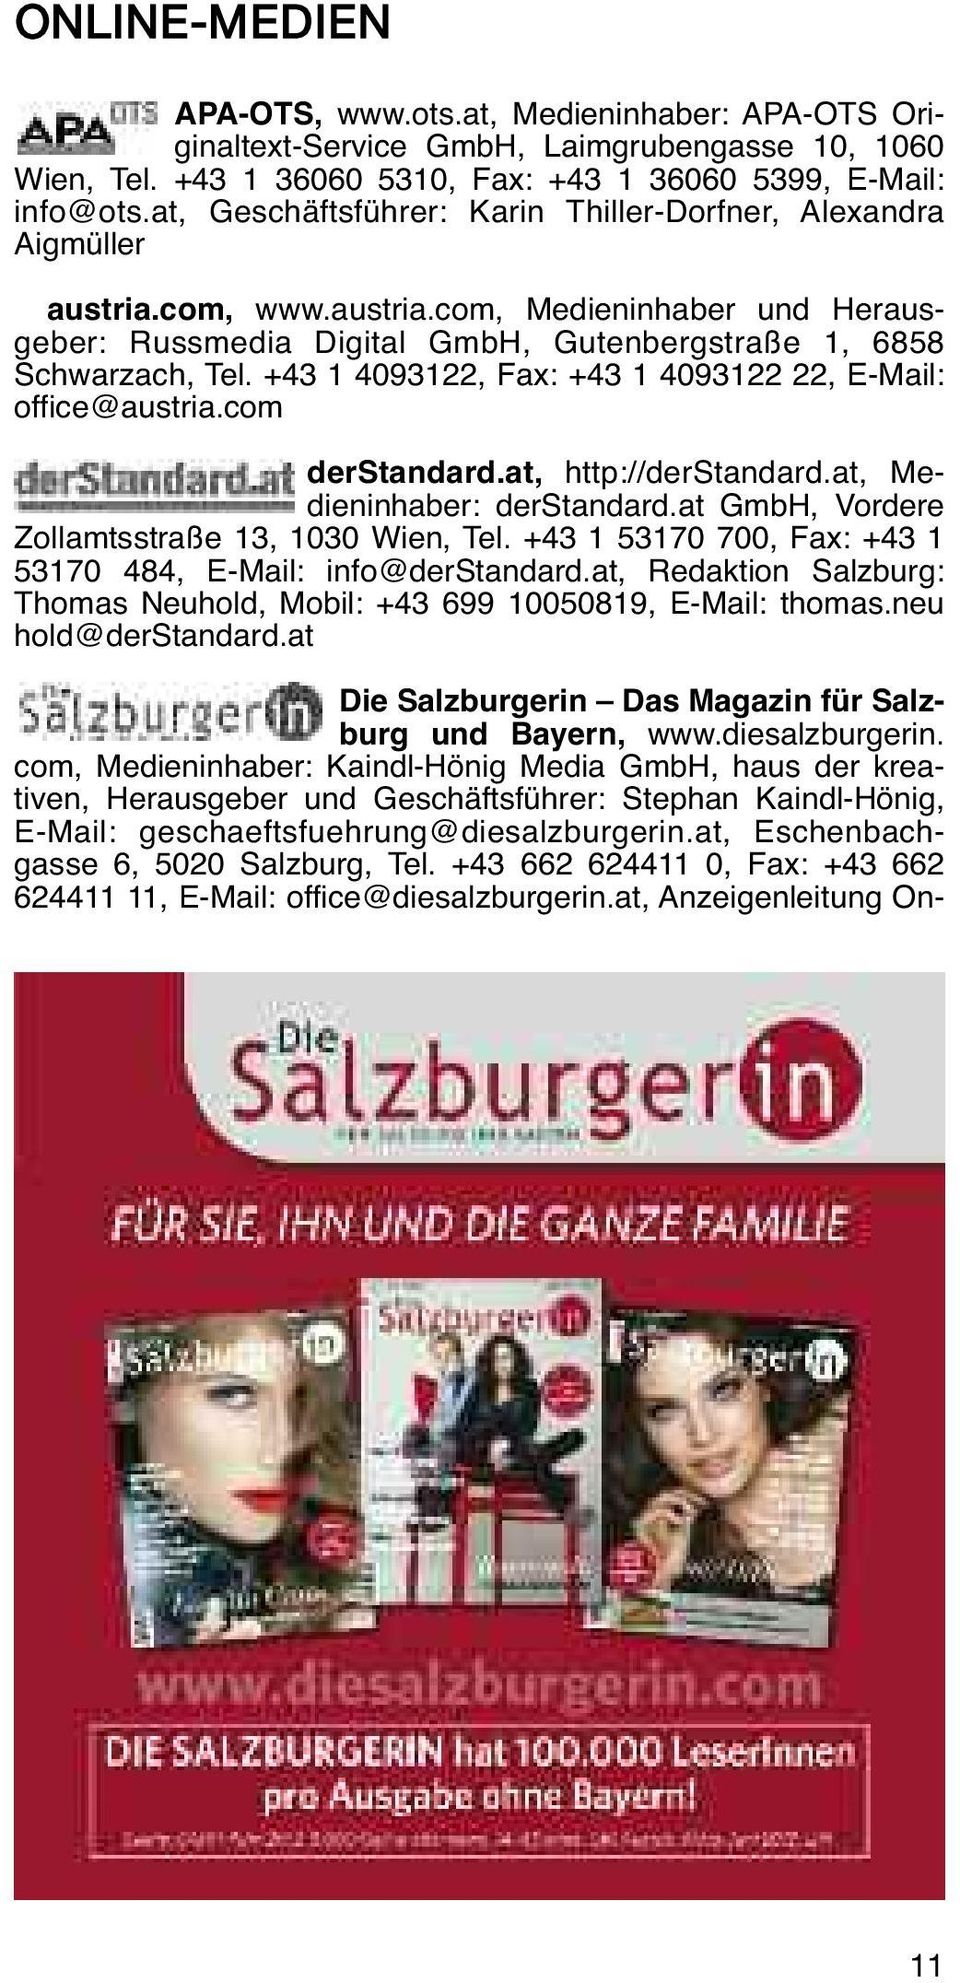 +43 1 4093122, Fax: +43 1 4093122 22, E-Mail: office@austria.com derstandard.at, http://derstandard.at, Me - dieninhaber: derstandard.at GmbH, Vordere Zollamtsstraße 13, 1030 Wien, Tel.